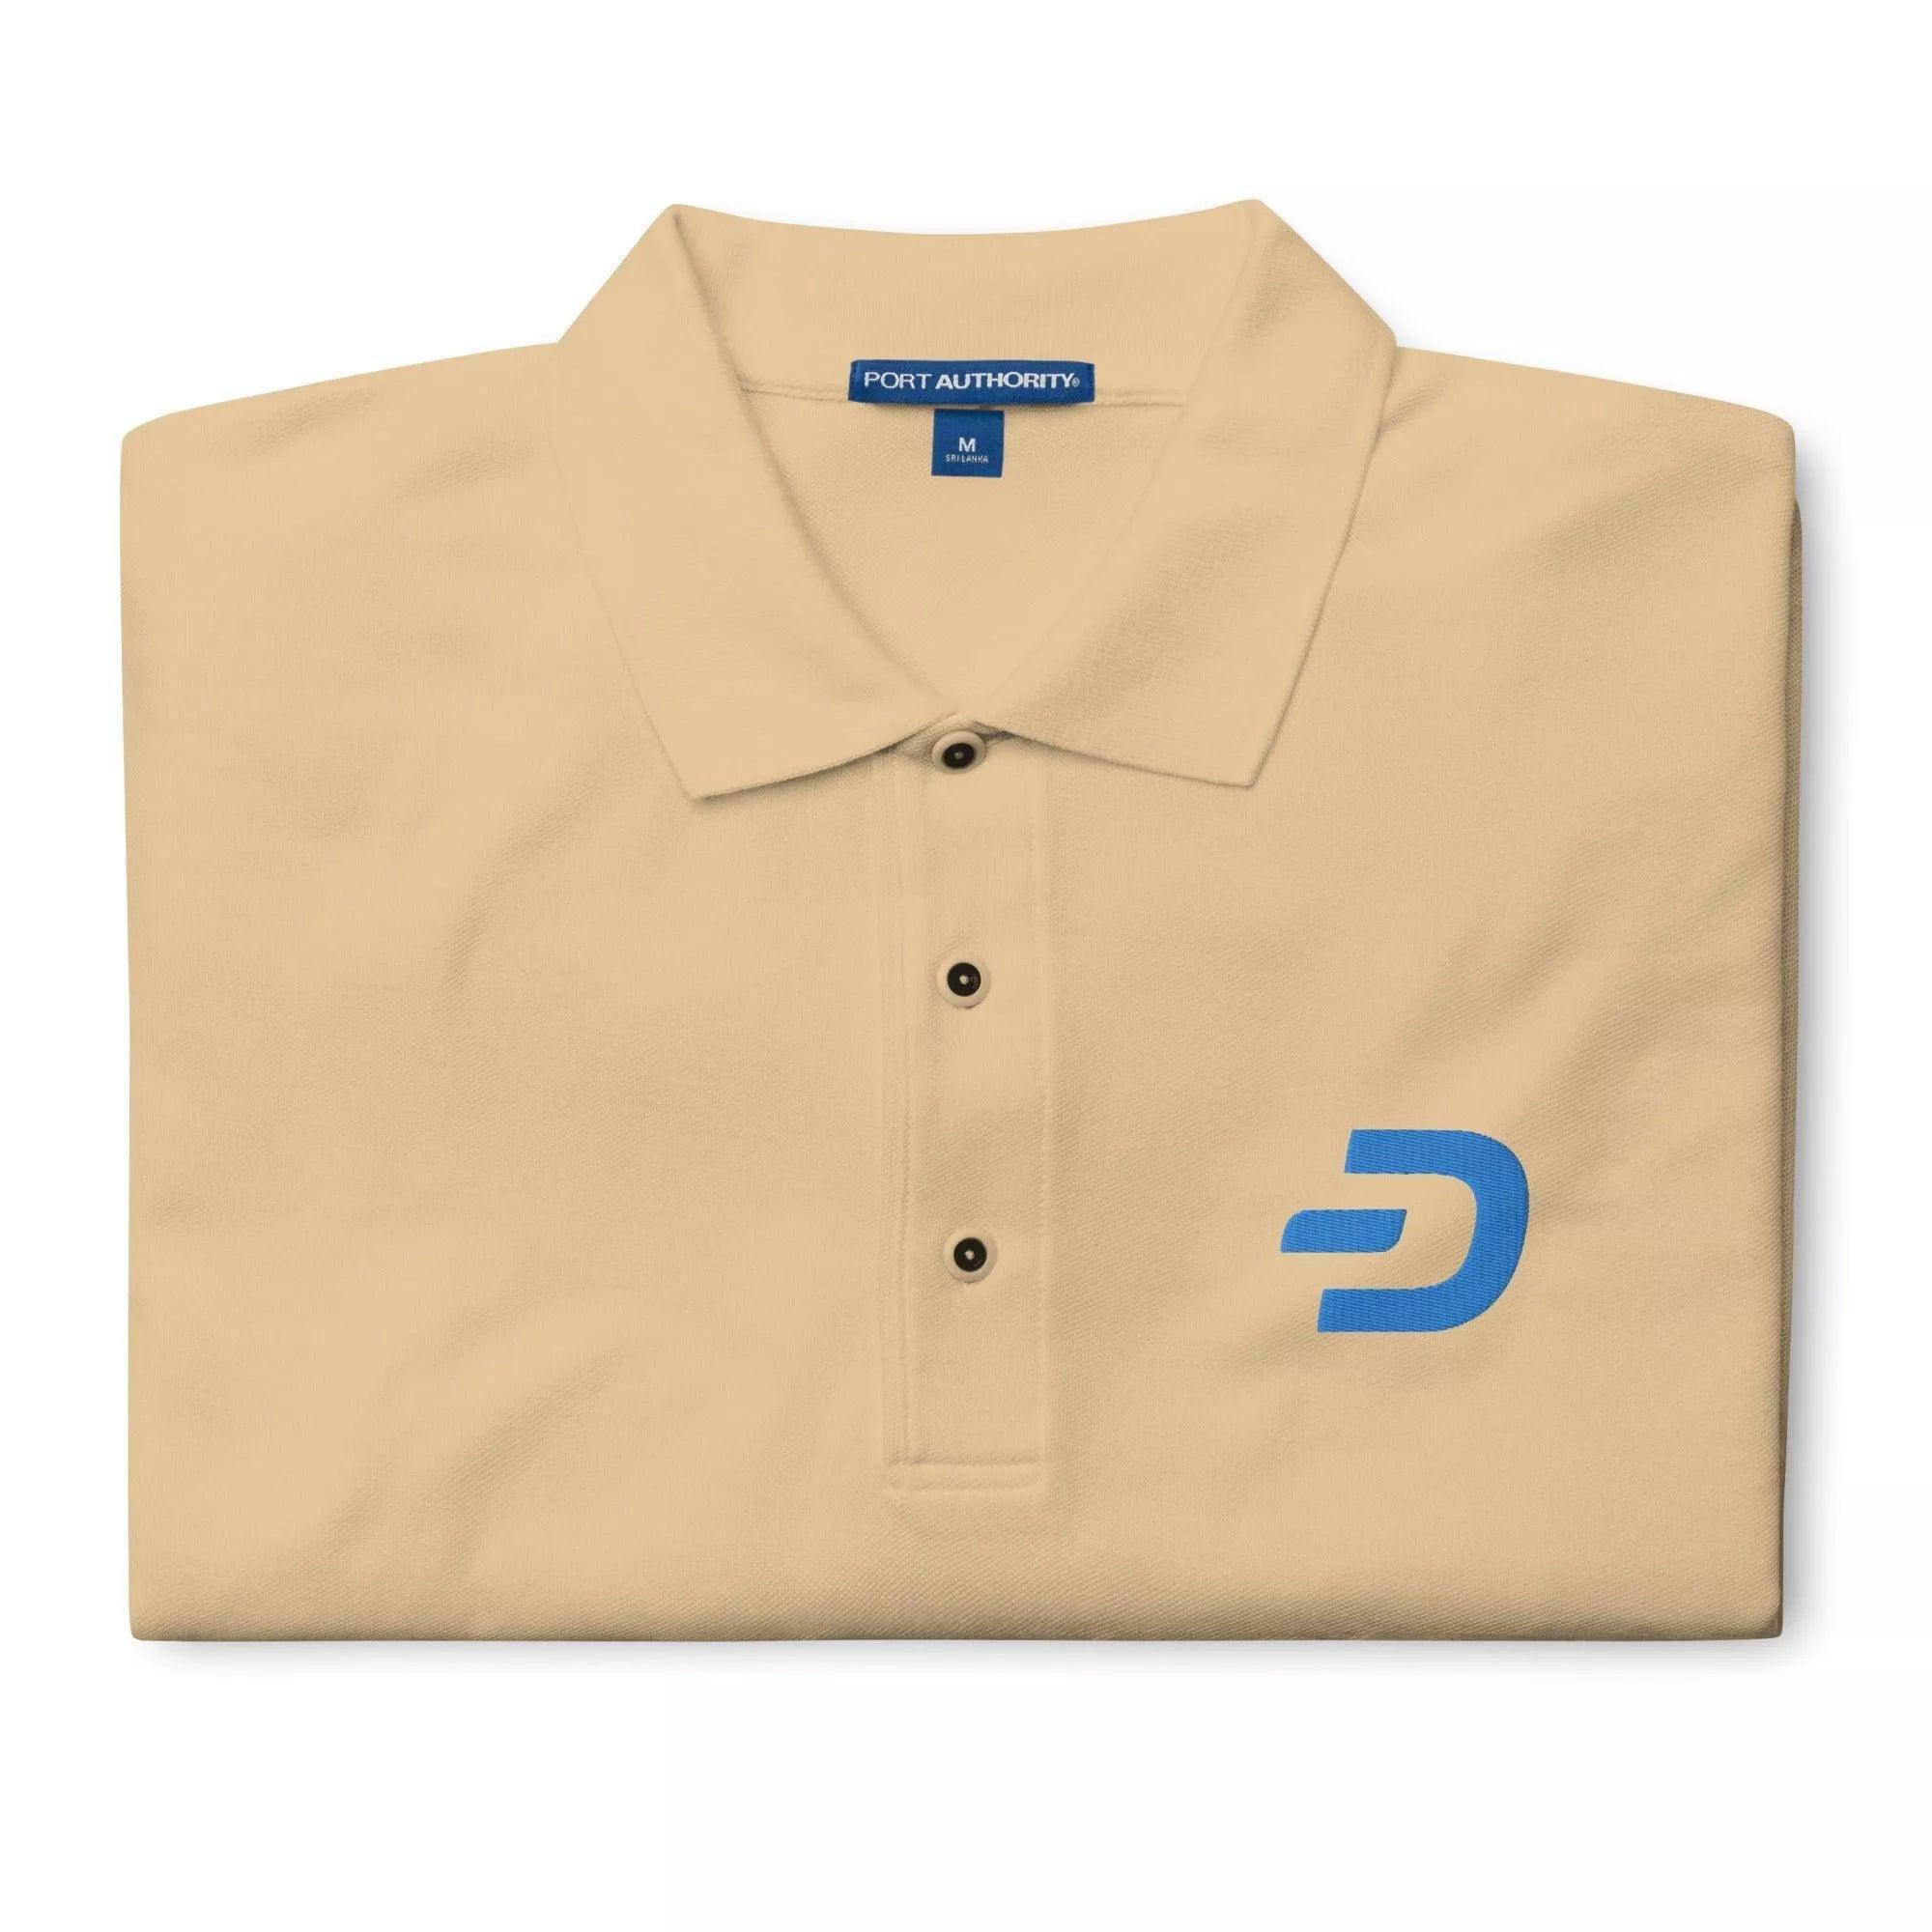 Dash Polo Shirt - InvestmenTees